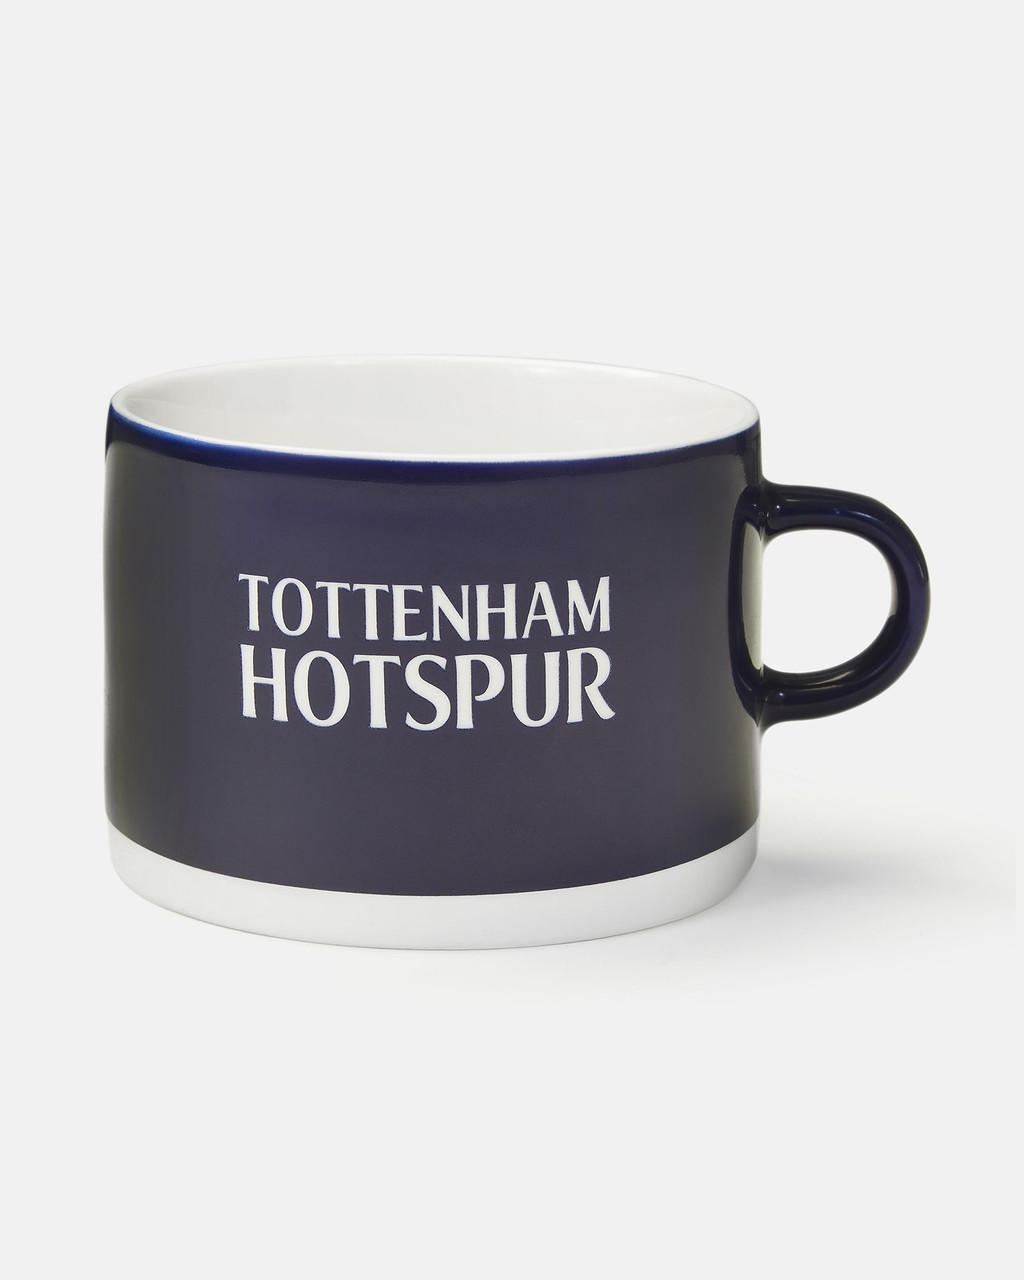  Spurs Navy Tottenham Hotspur Mug 